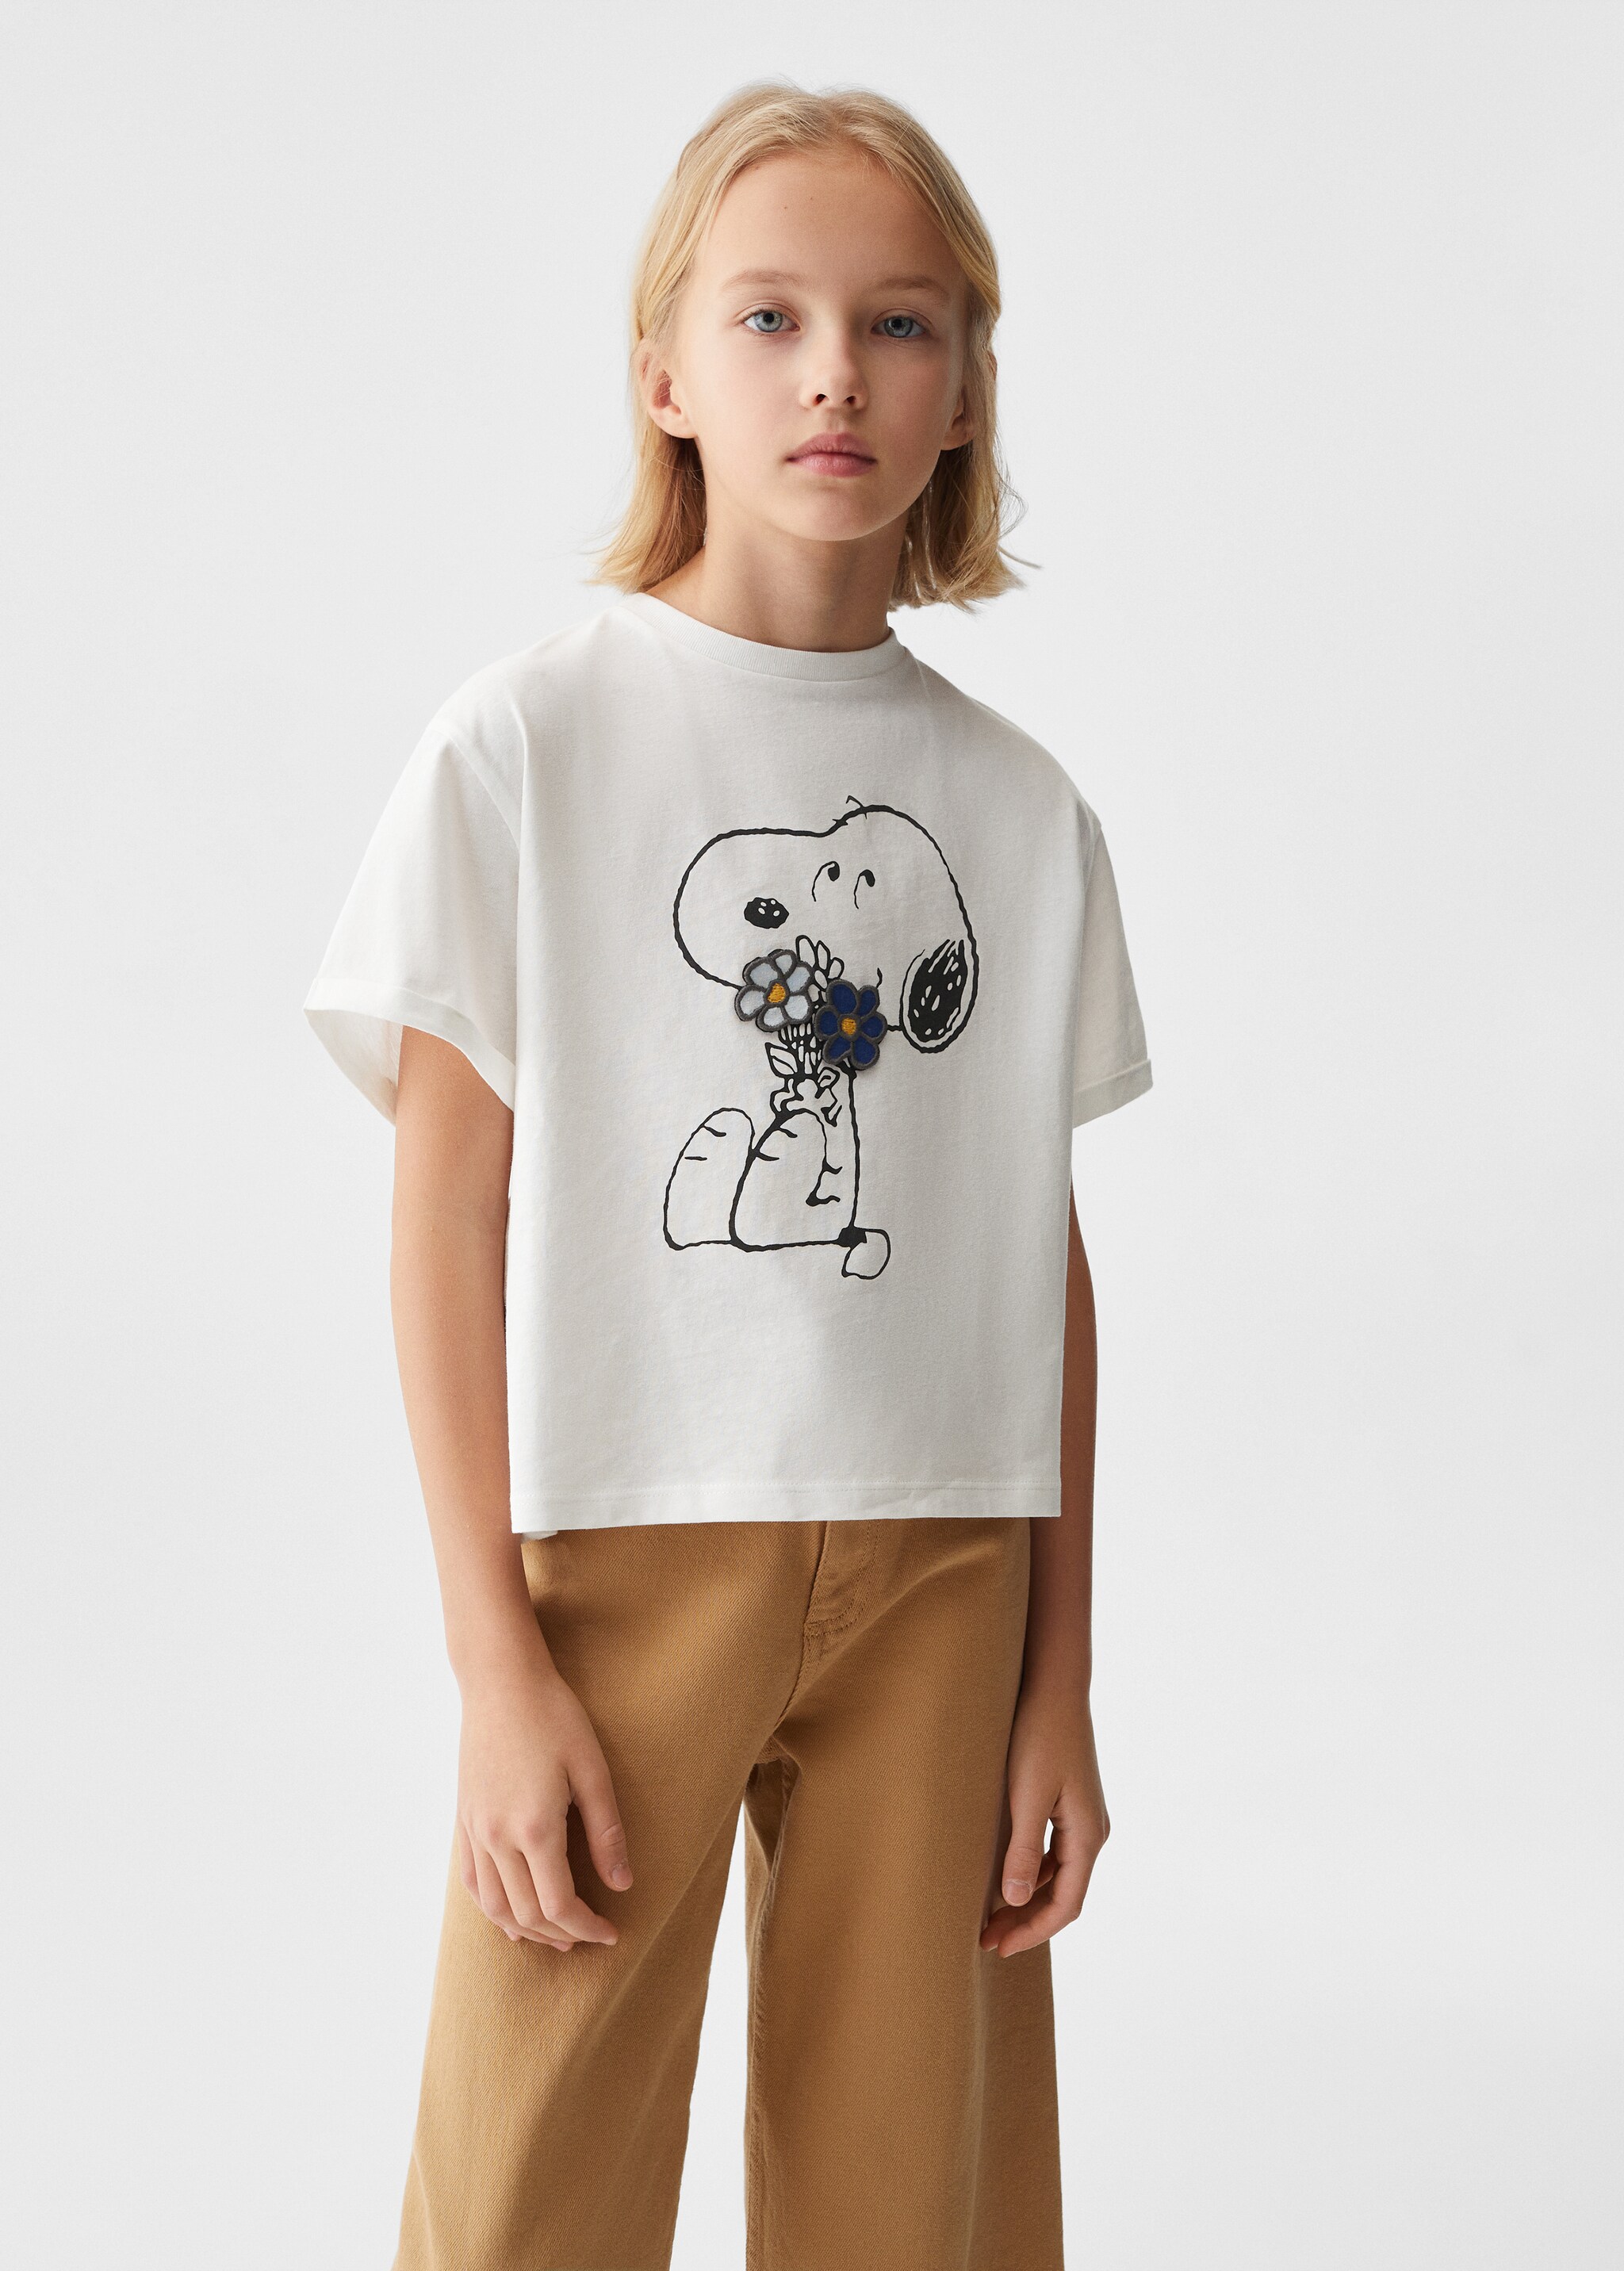 Snoopy printed t-shirt - Medium plane